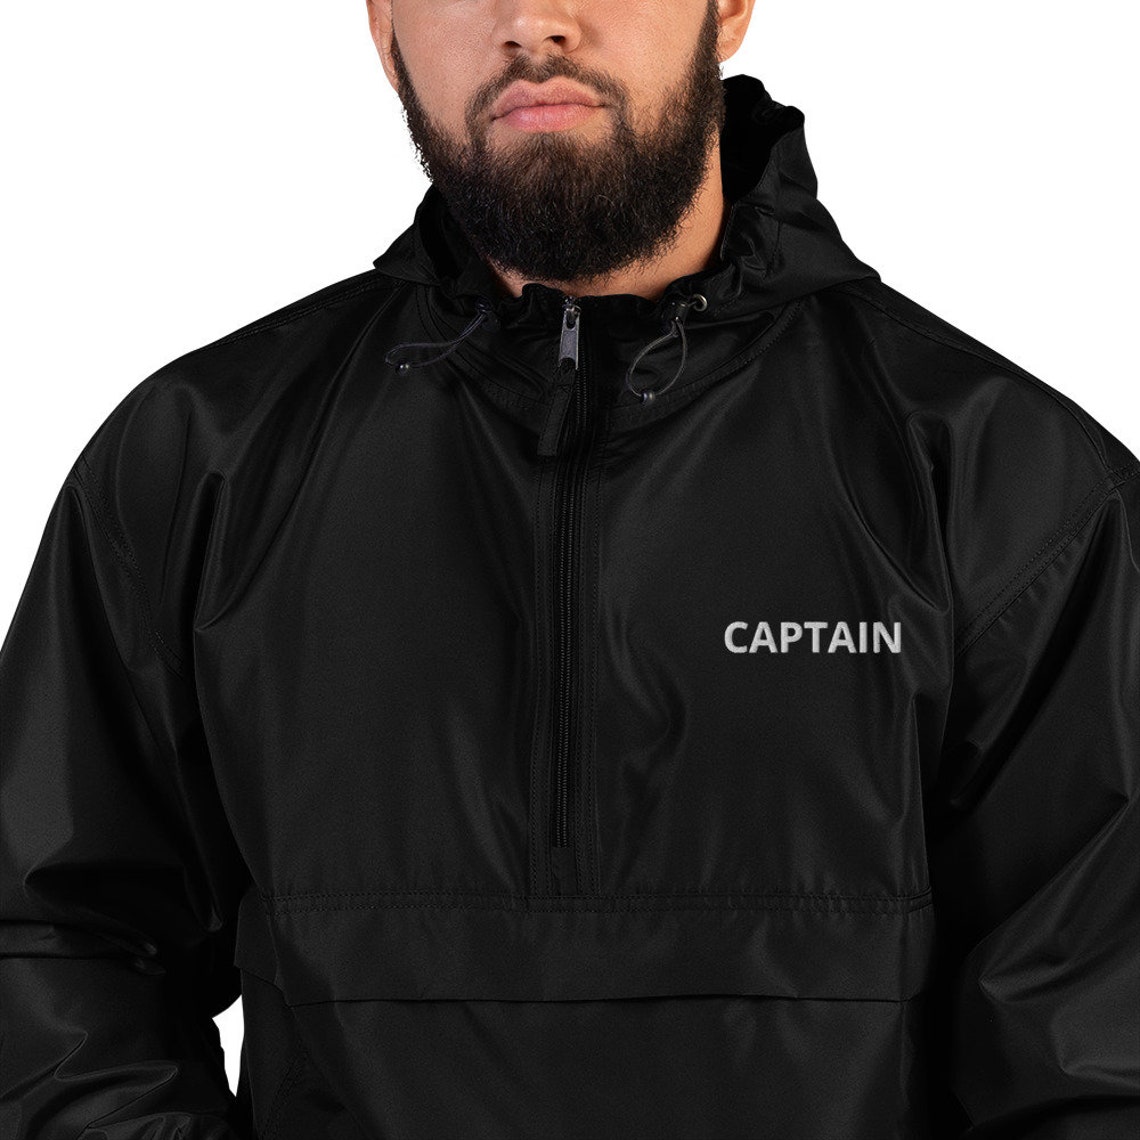 yacht captain jacket